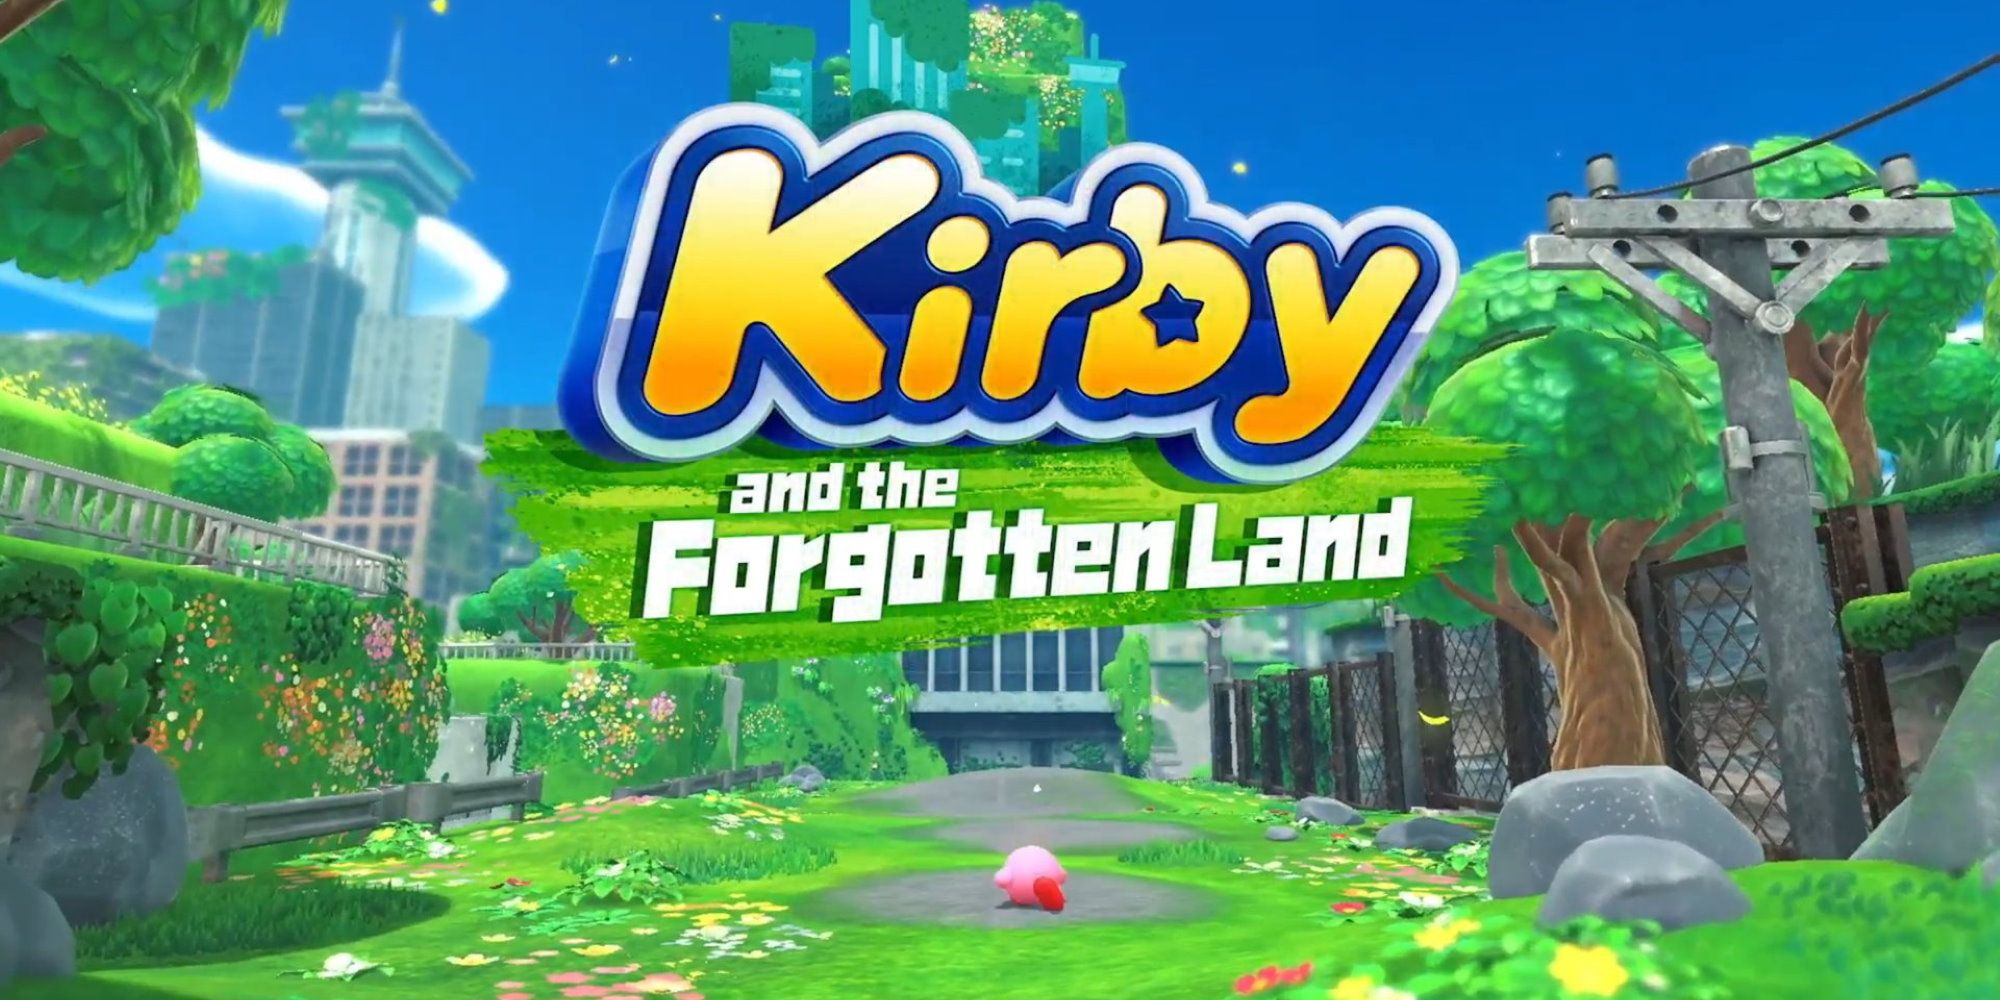 Kirby - via Twitter